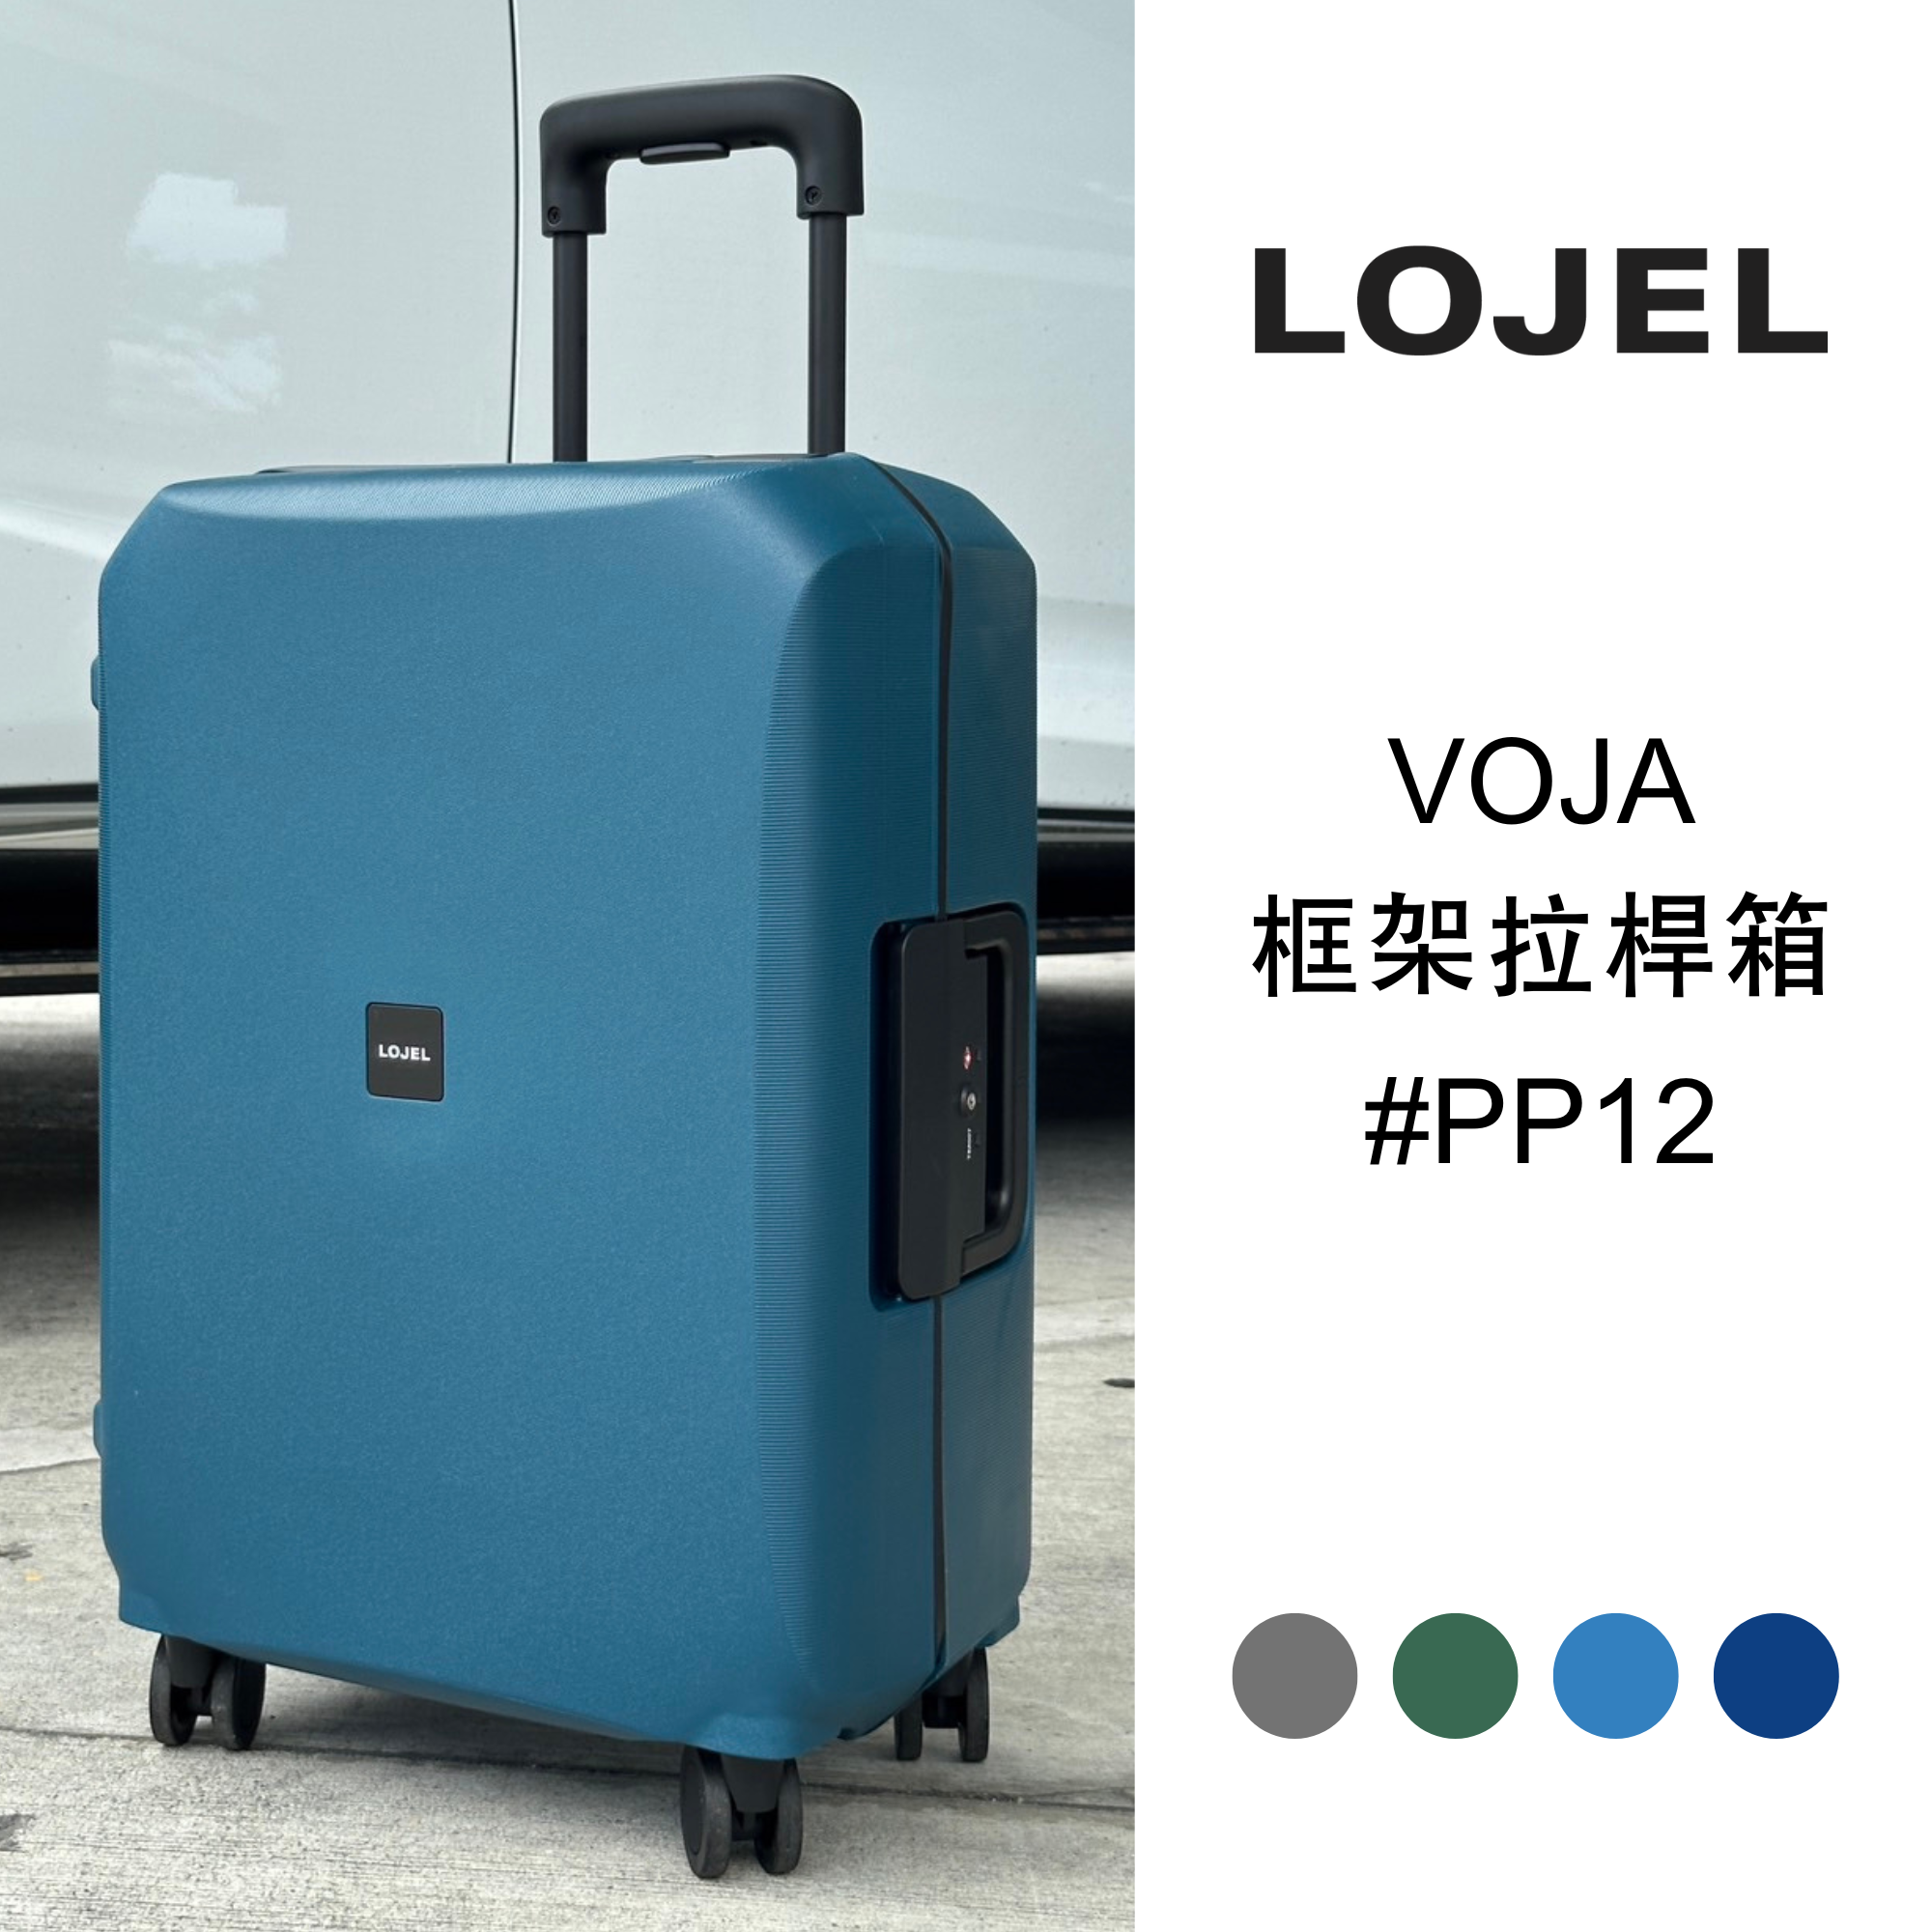 LOJEL 26吋 行李箱 旅行箱 PP框架箱 防水箱 VOJA PP12 (藍/綠/灰/墨藍)